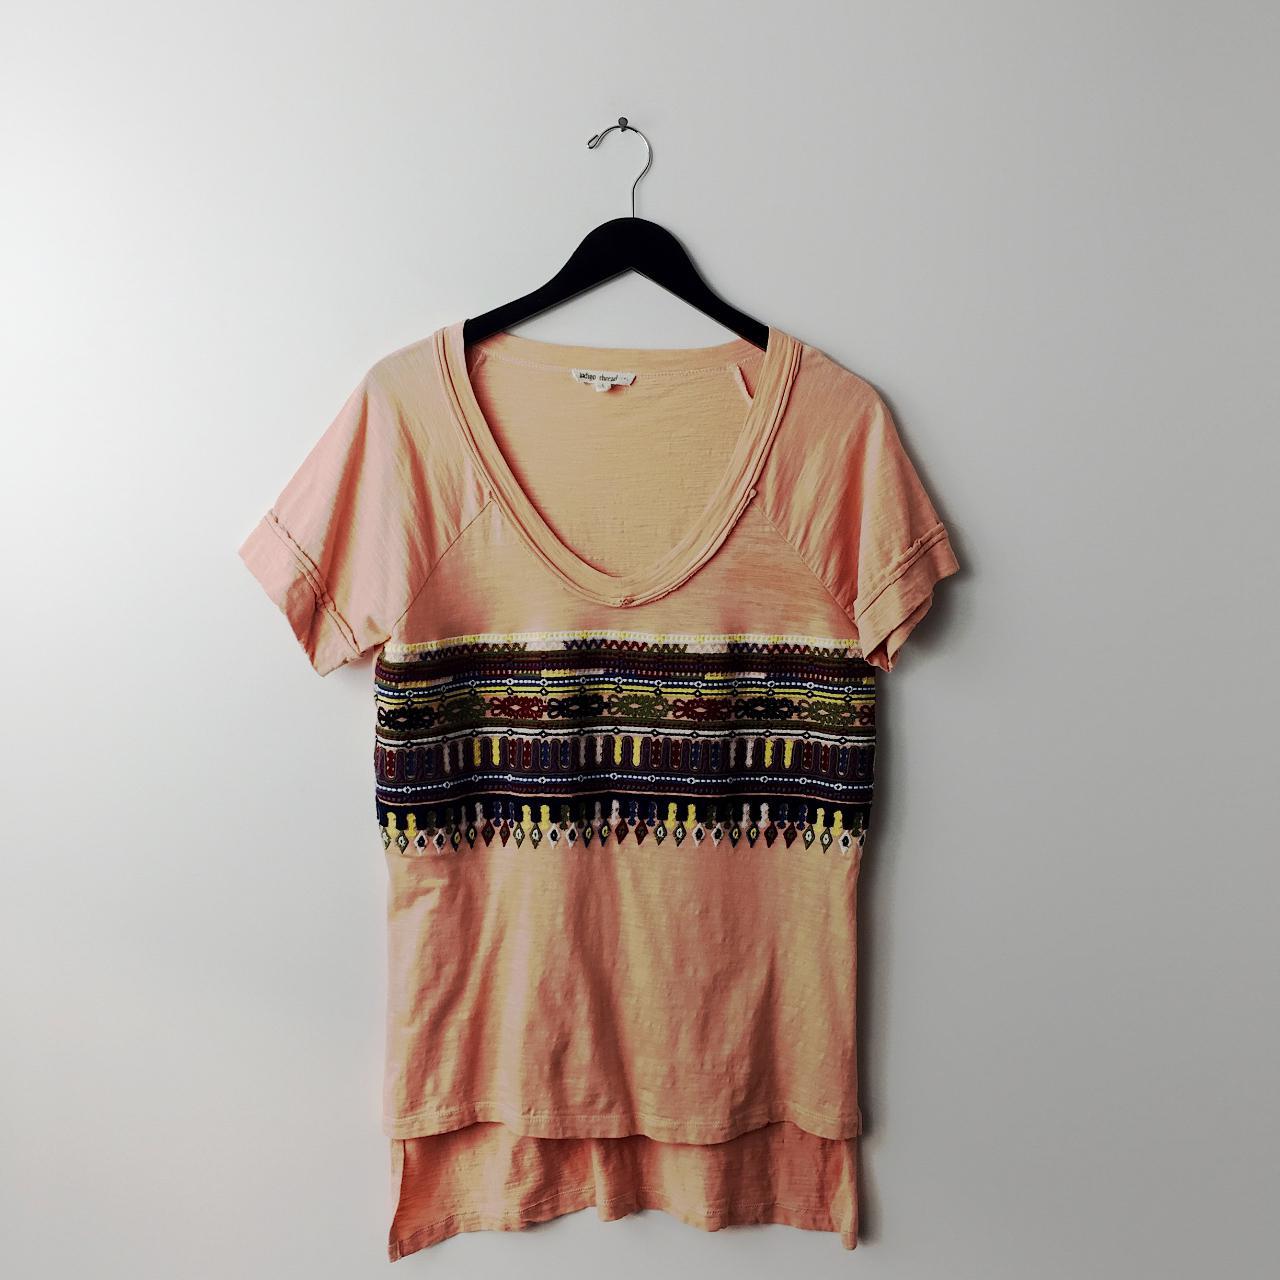 Product Image 1 - Indigo Thread Embroidered Tee Shirt